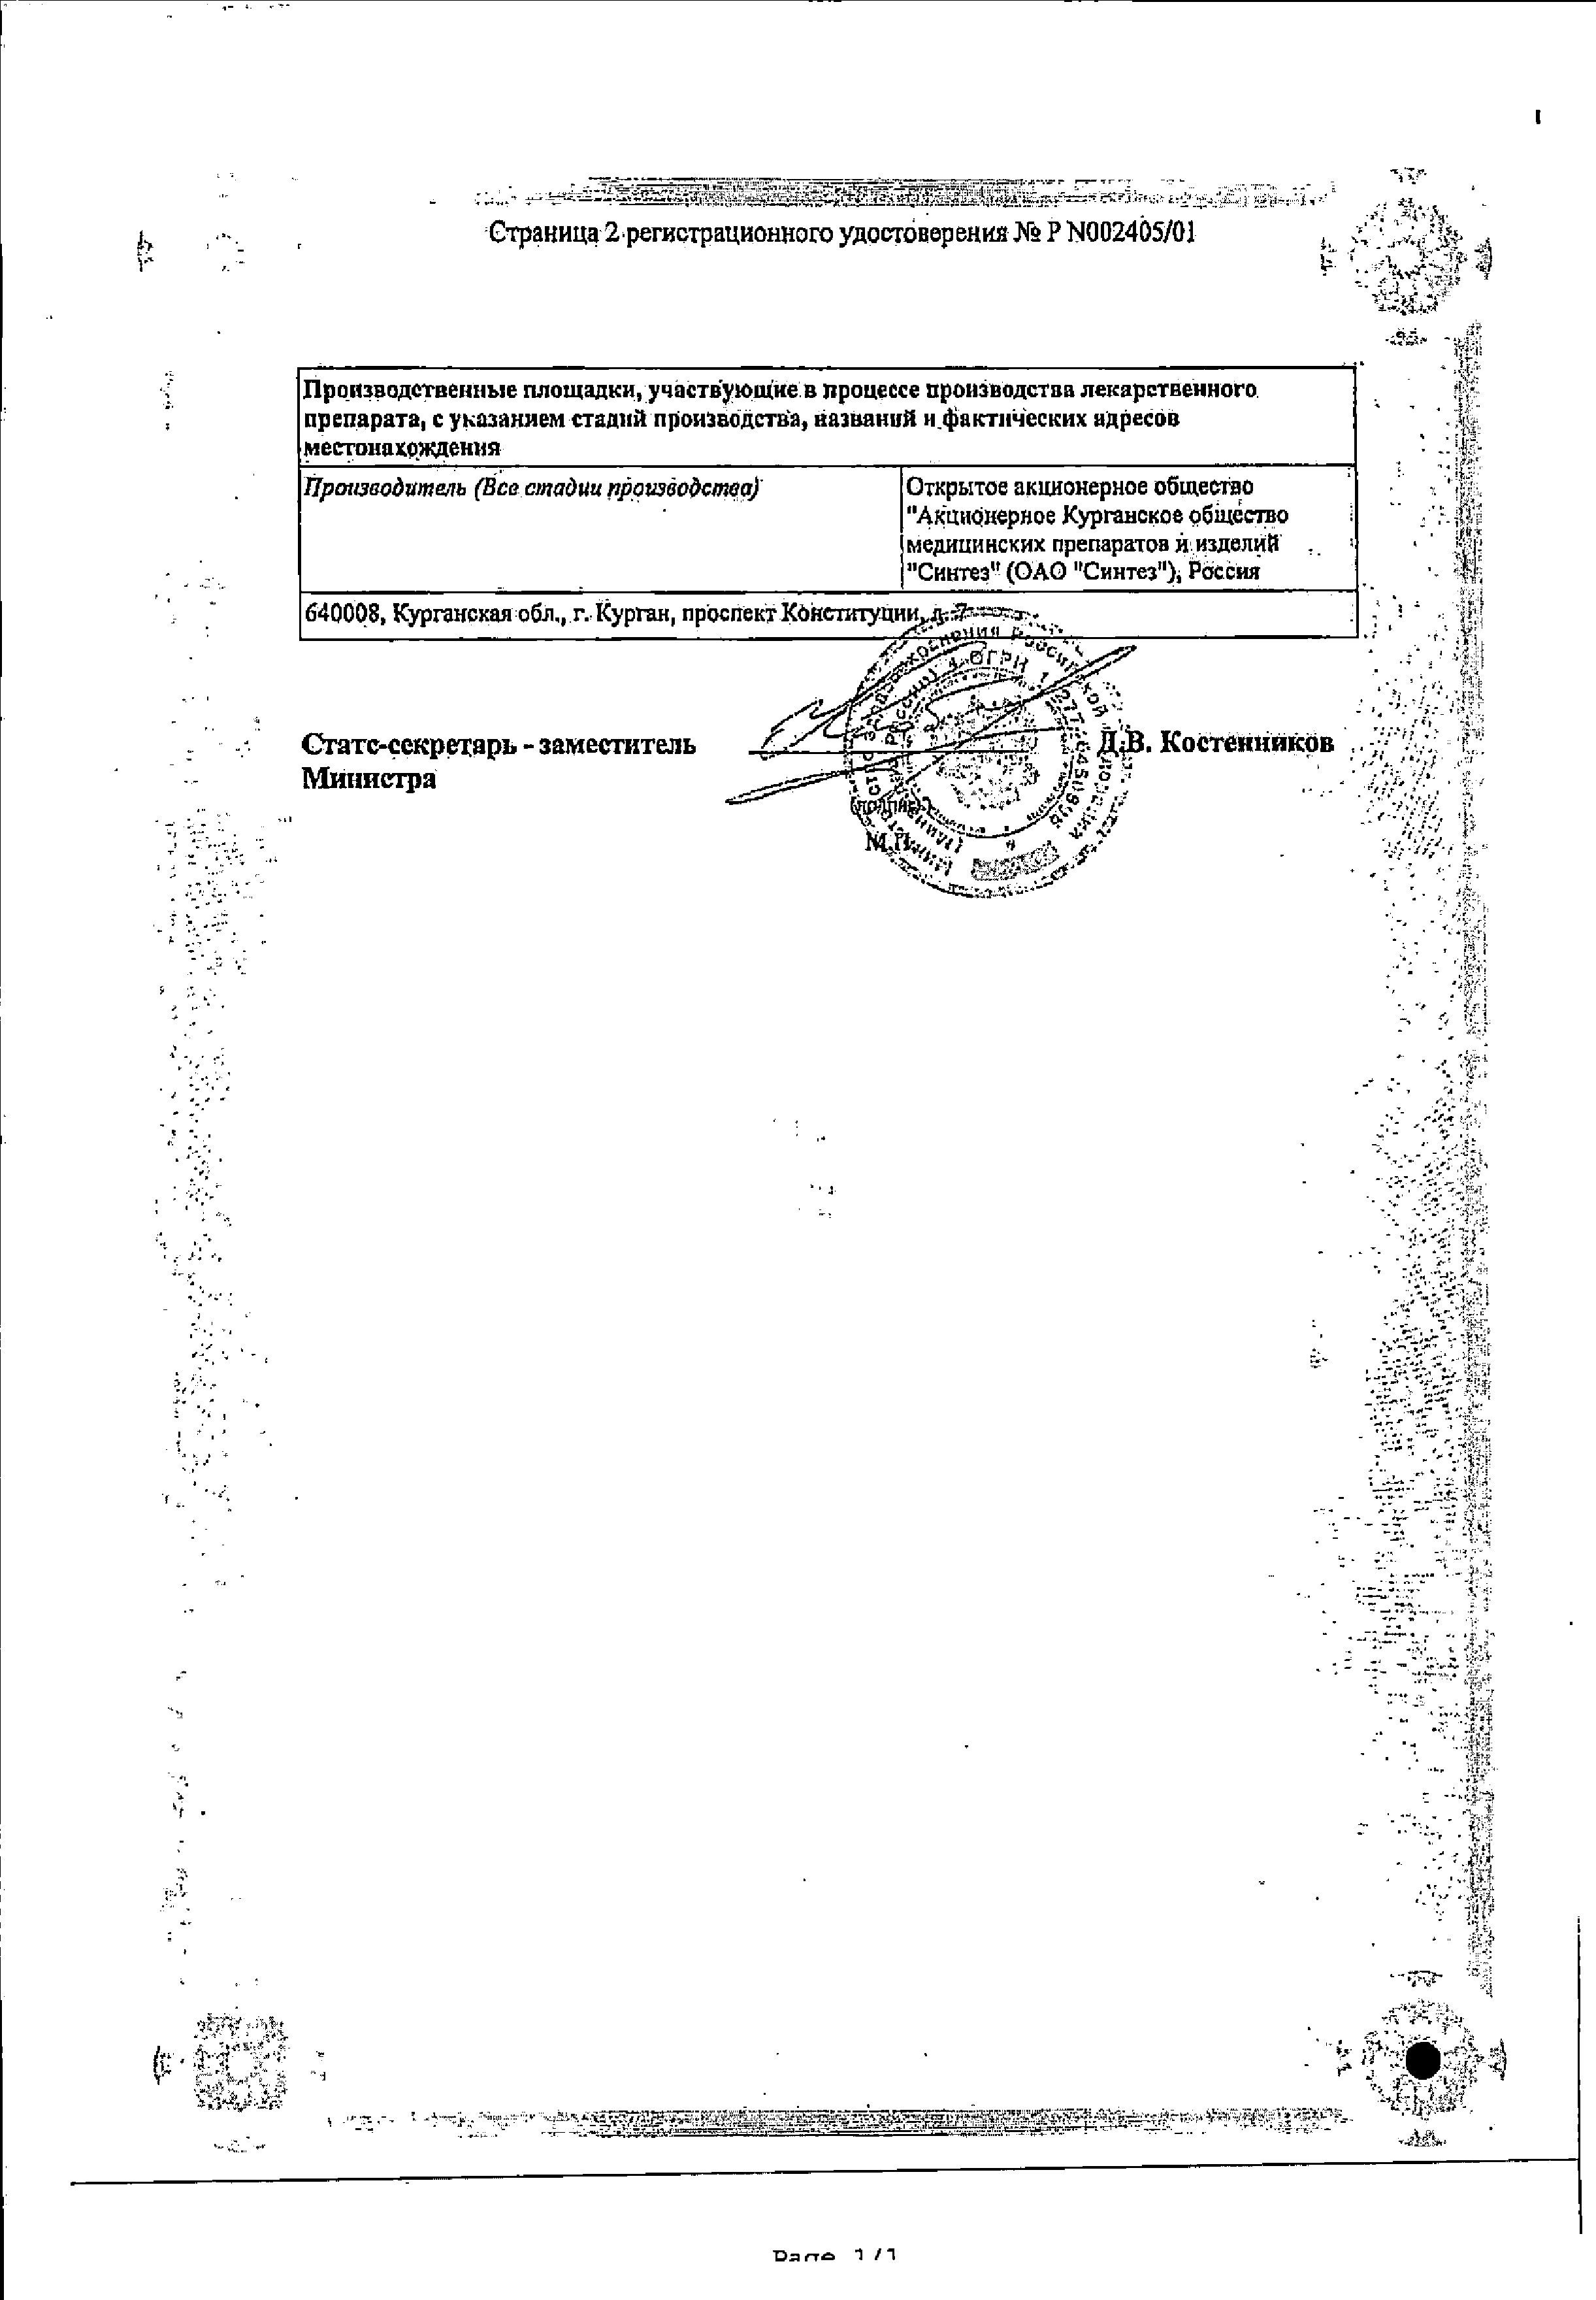 Линкомицин-АКОС сертификат